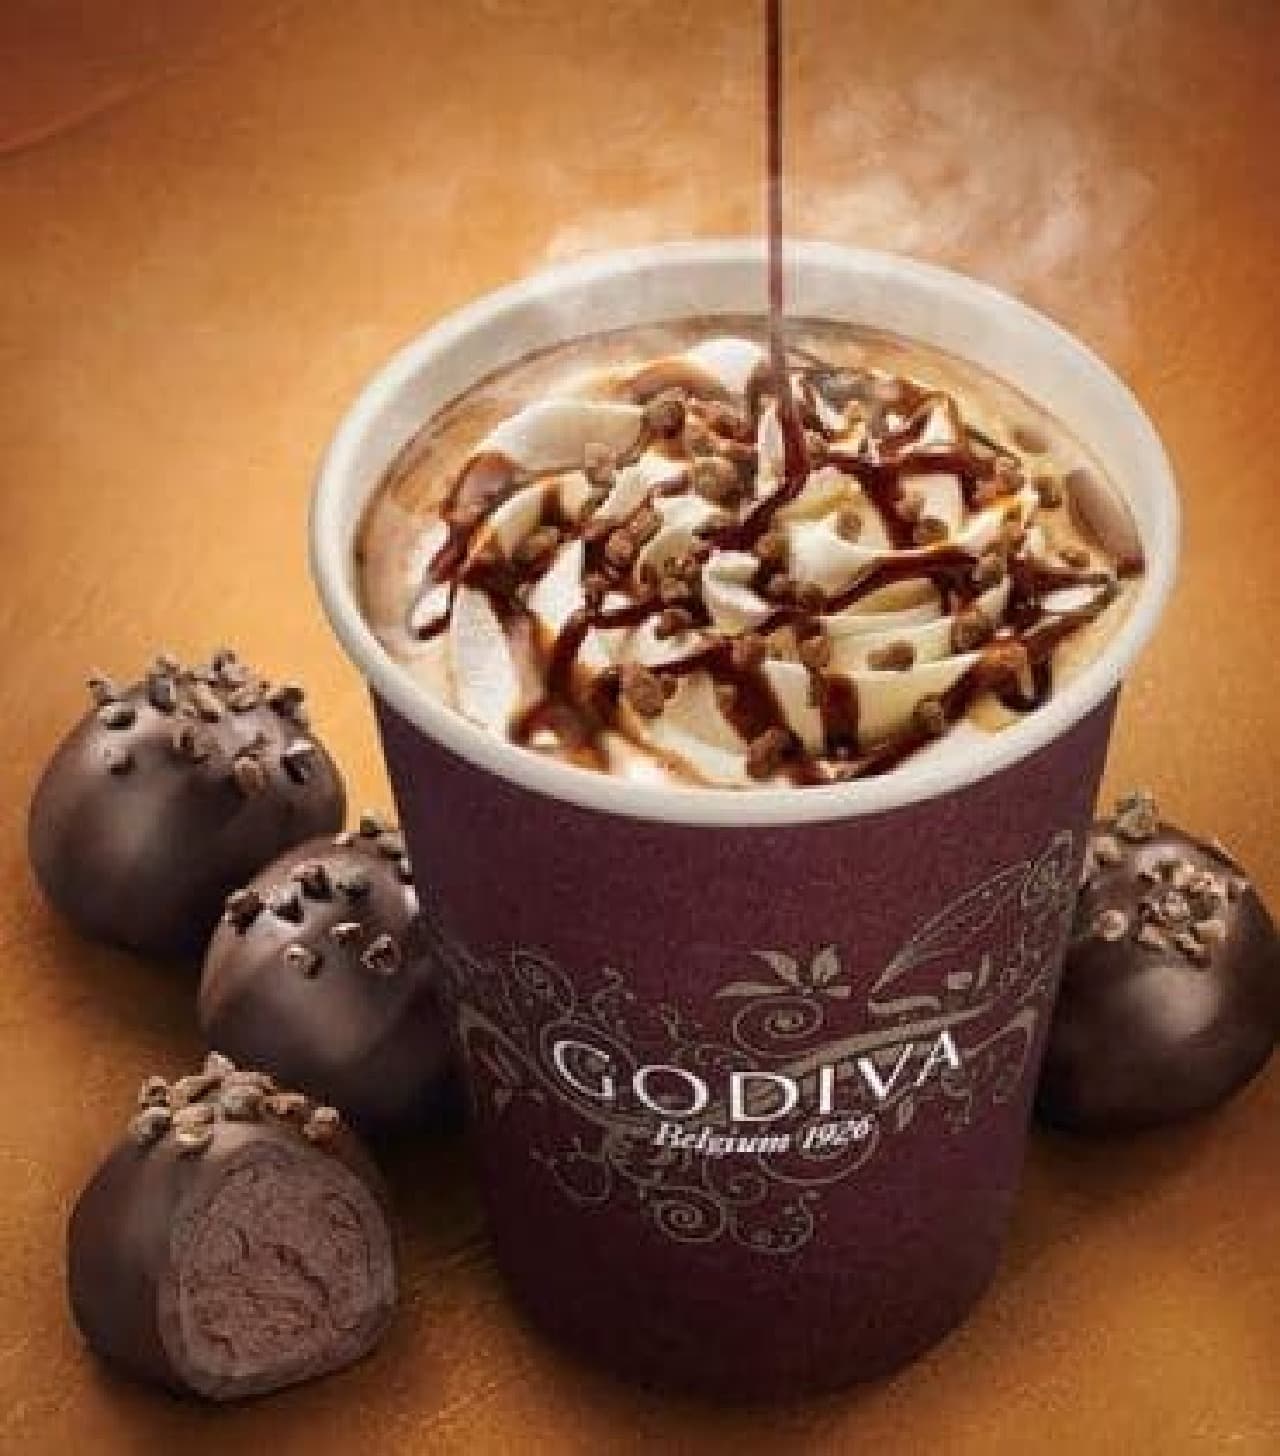 Godiva "Hot Chocolate Truffle Caramel"